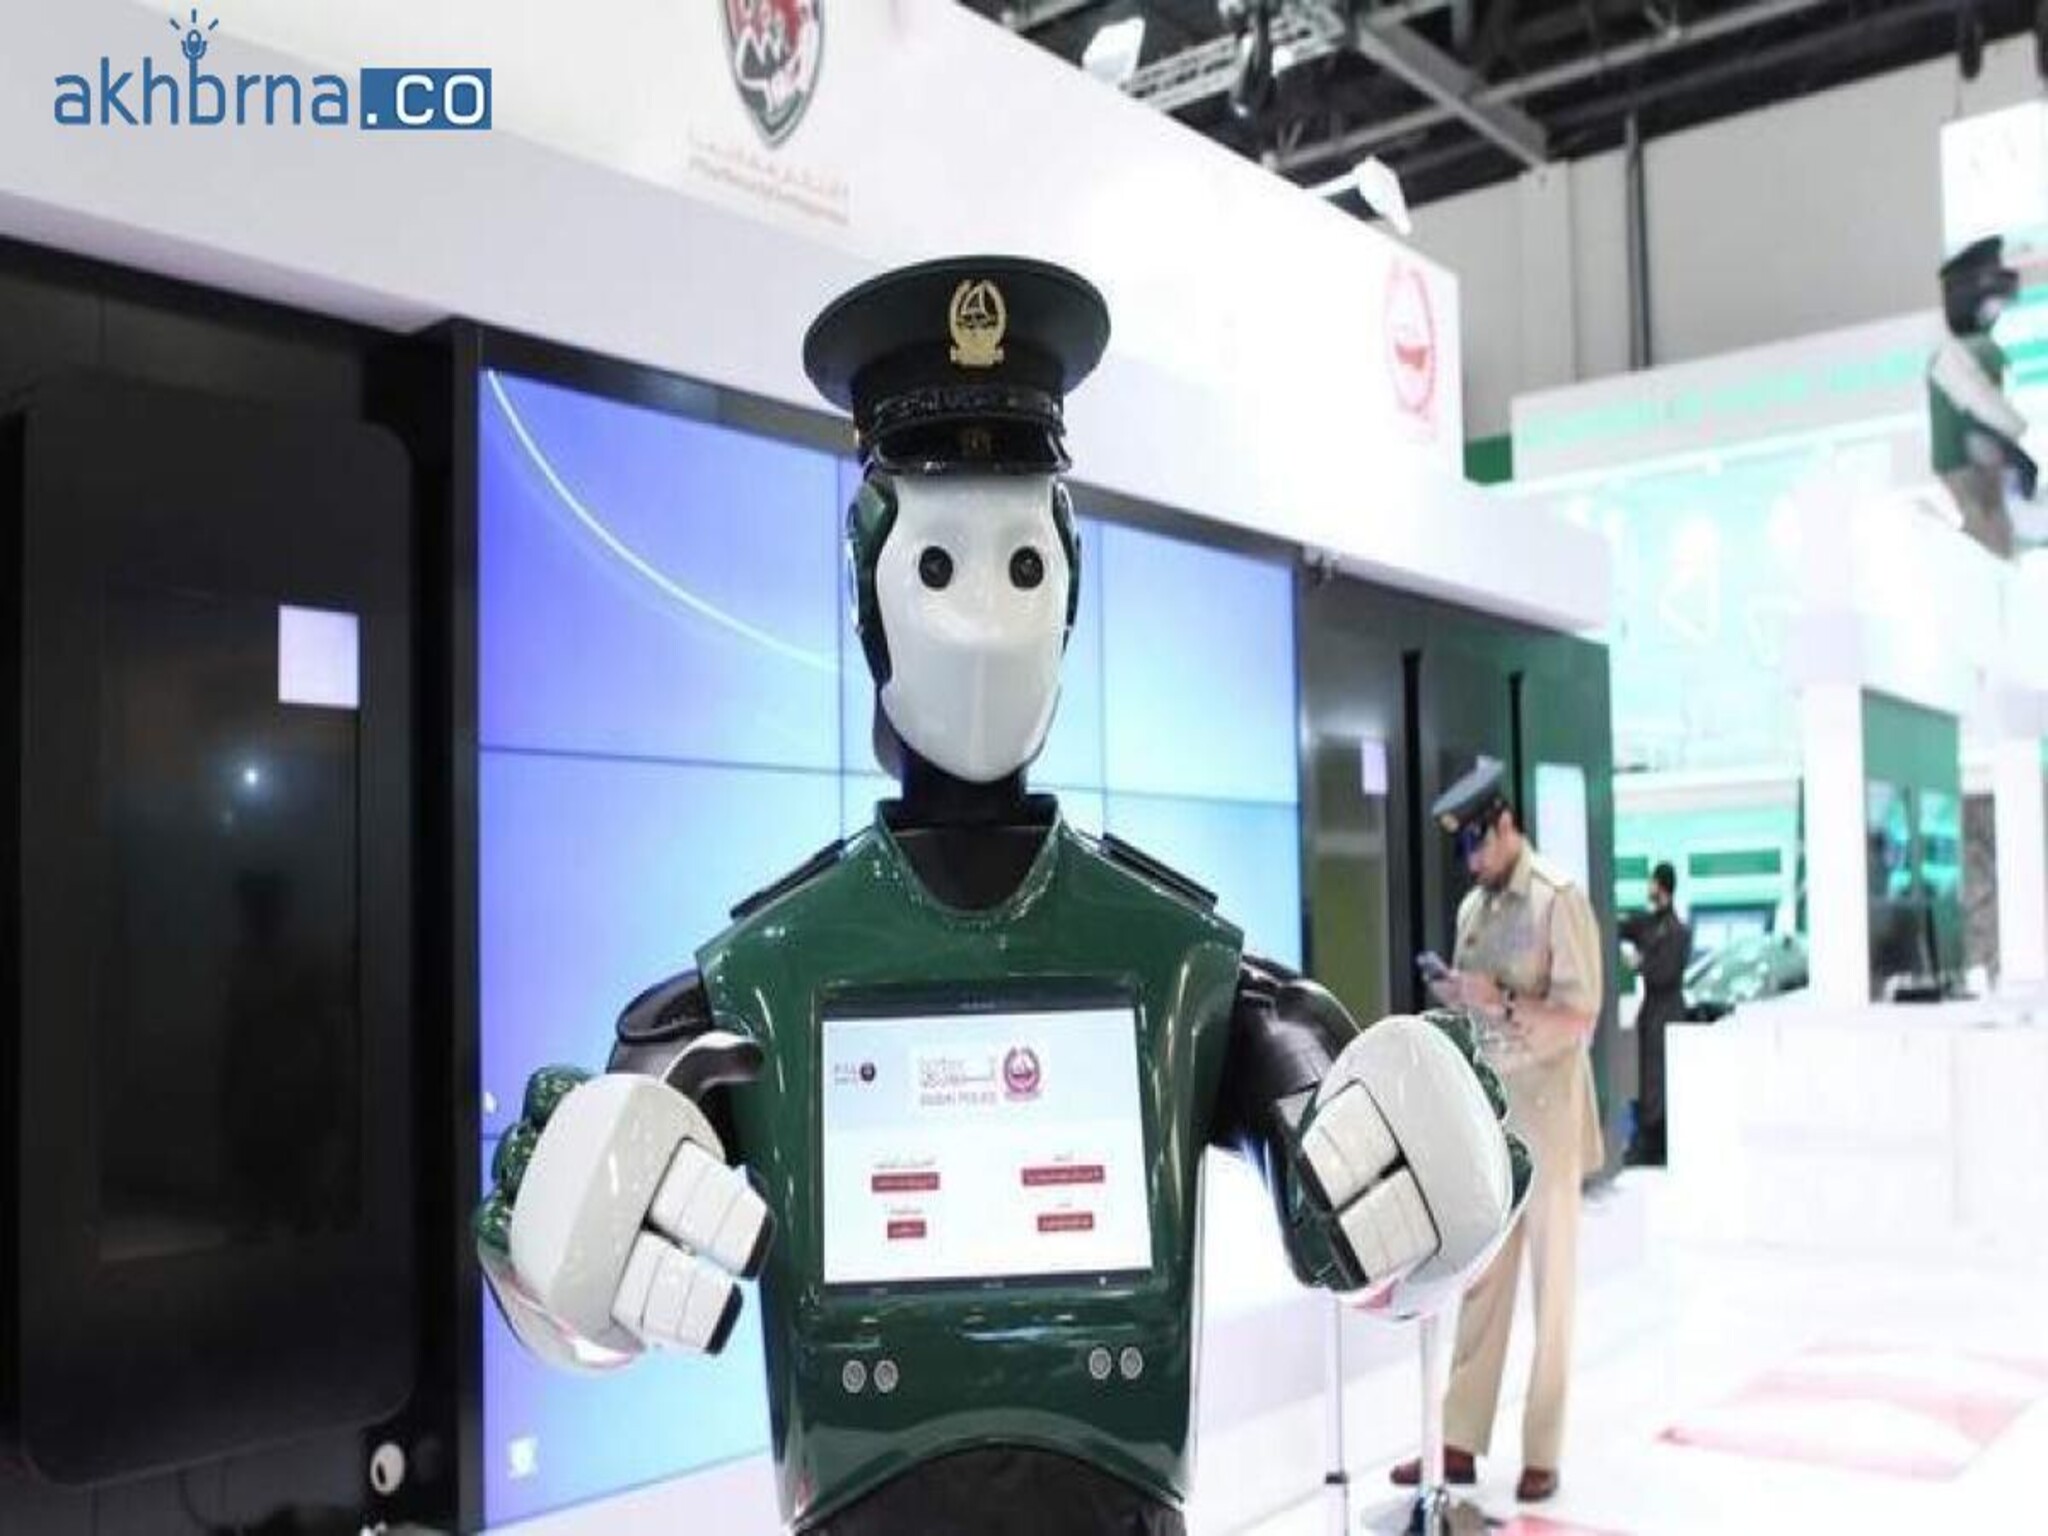 Dubai Police integrating AI into police & security operations